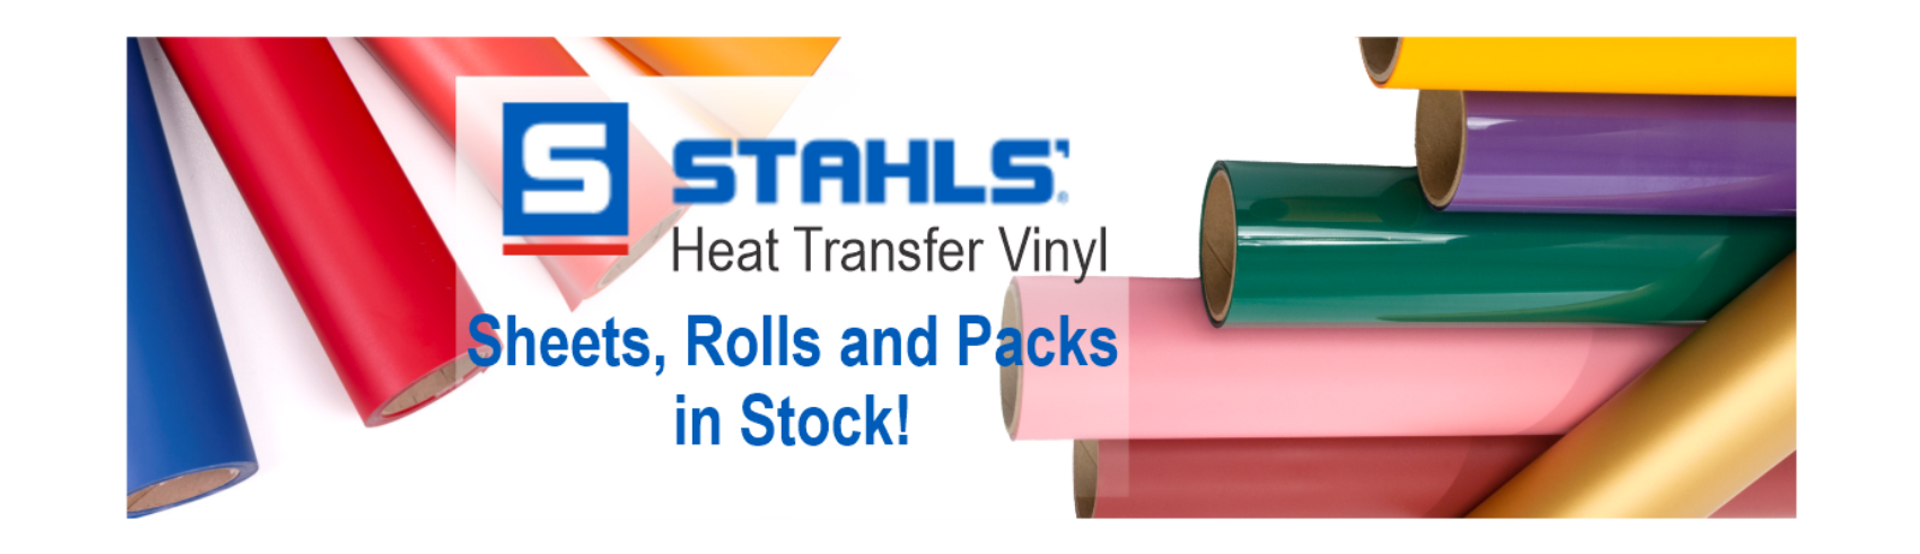 3D Puff HTV - 12 x 12 sheet - StarCraft Heat Transfer Vinyl - Black - VIP  Vinyl Supply